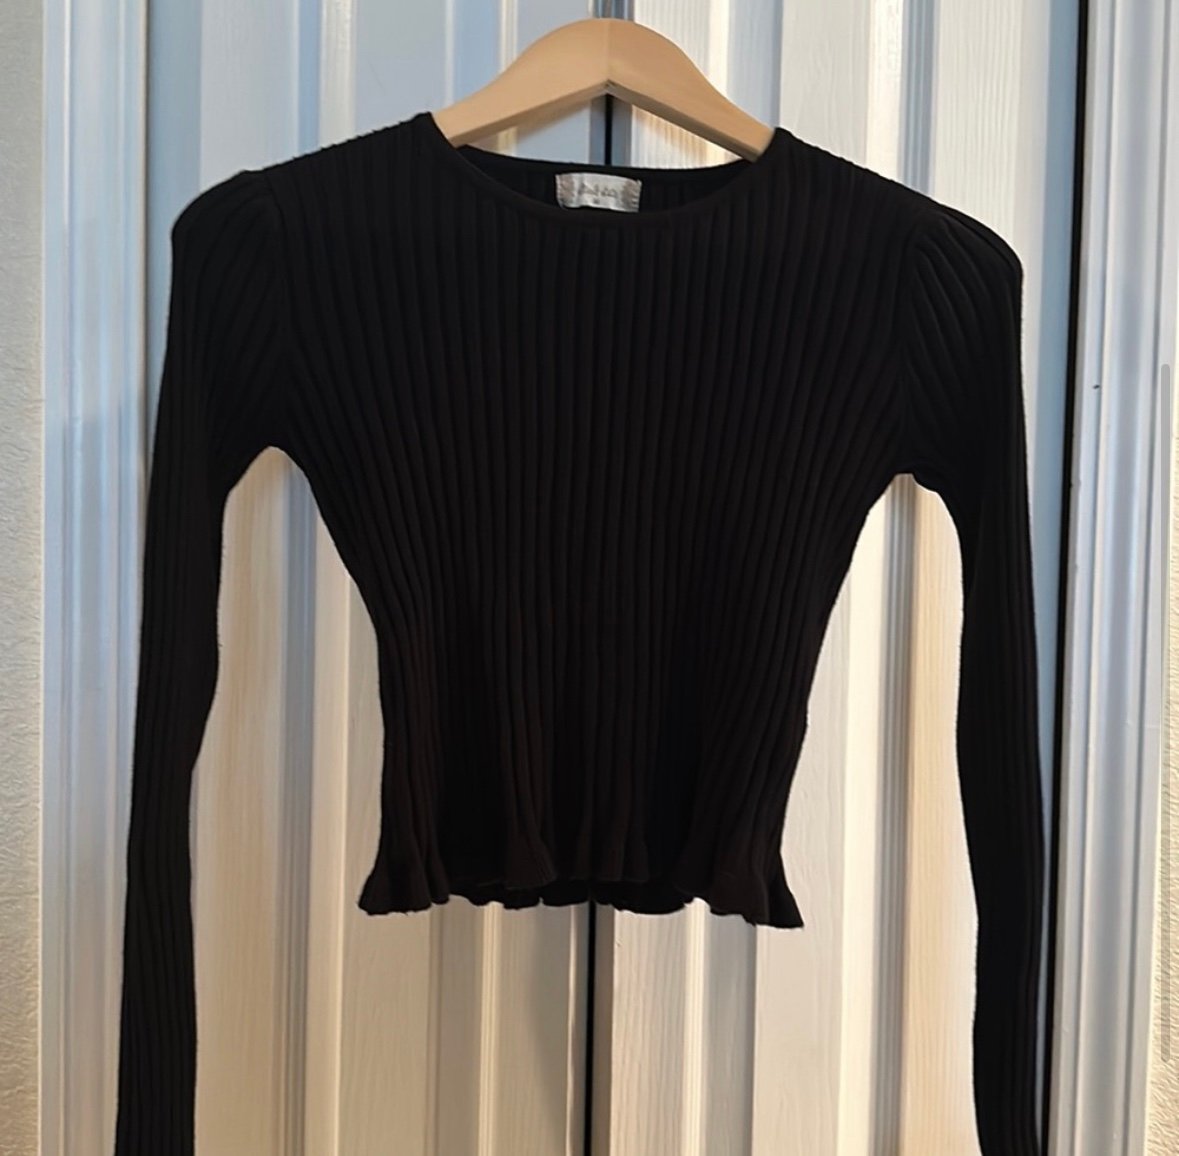 Cheap Black Cropped Sweater Altar d State k4JykU2QS New Style